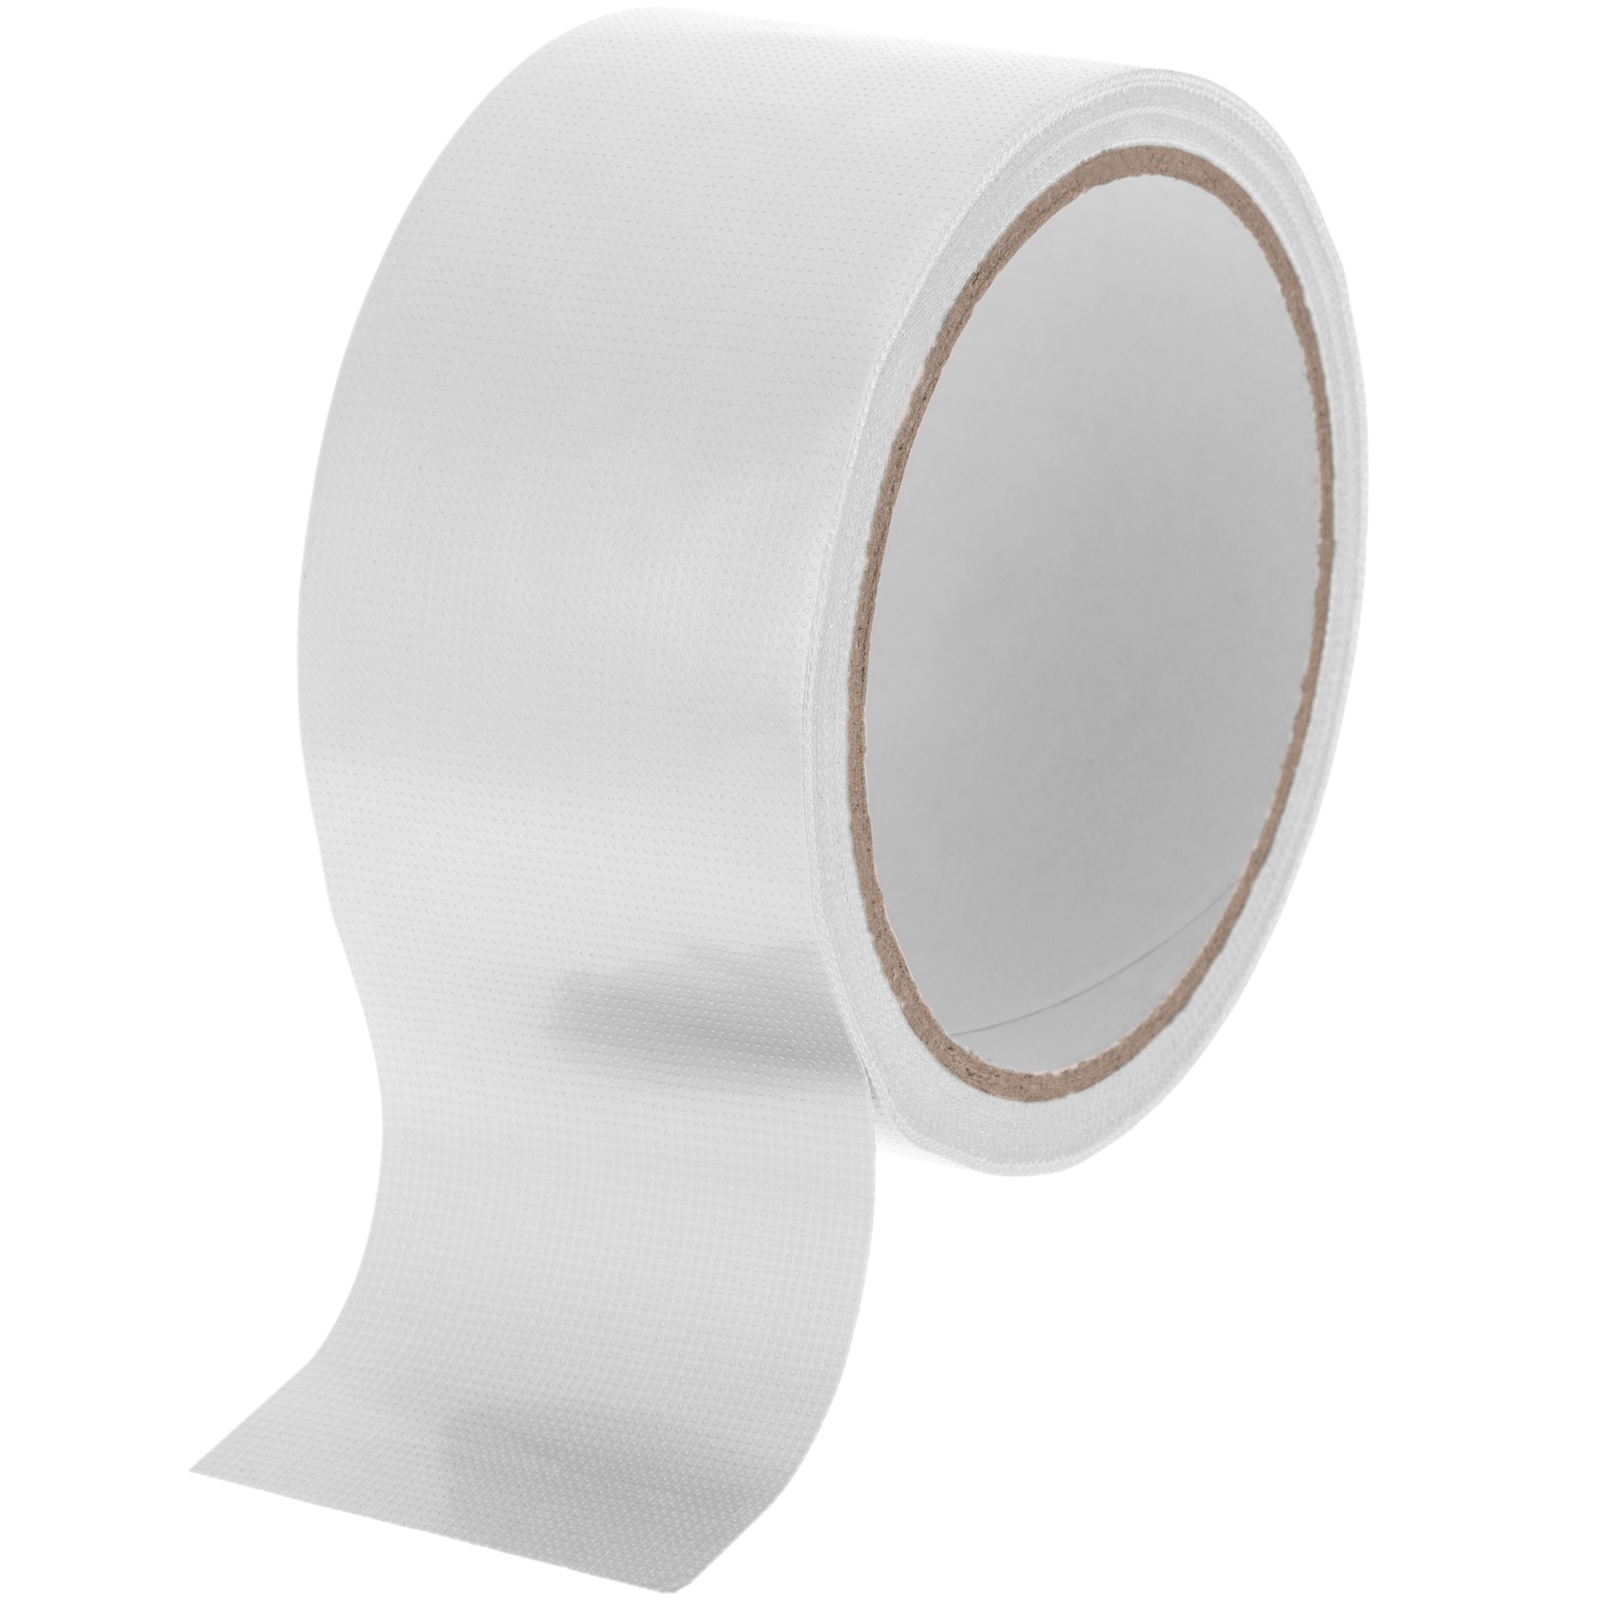 Gocableties - Cinta americana blanca de 100 mm x 50 m - Cinta de tela  resistente, ancha, adhesiva e impermeable - Para reparar, fijar, agrupar